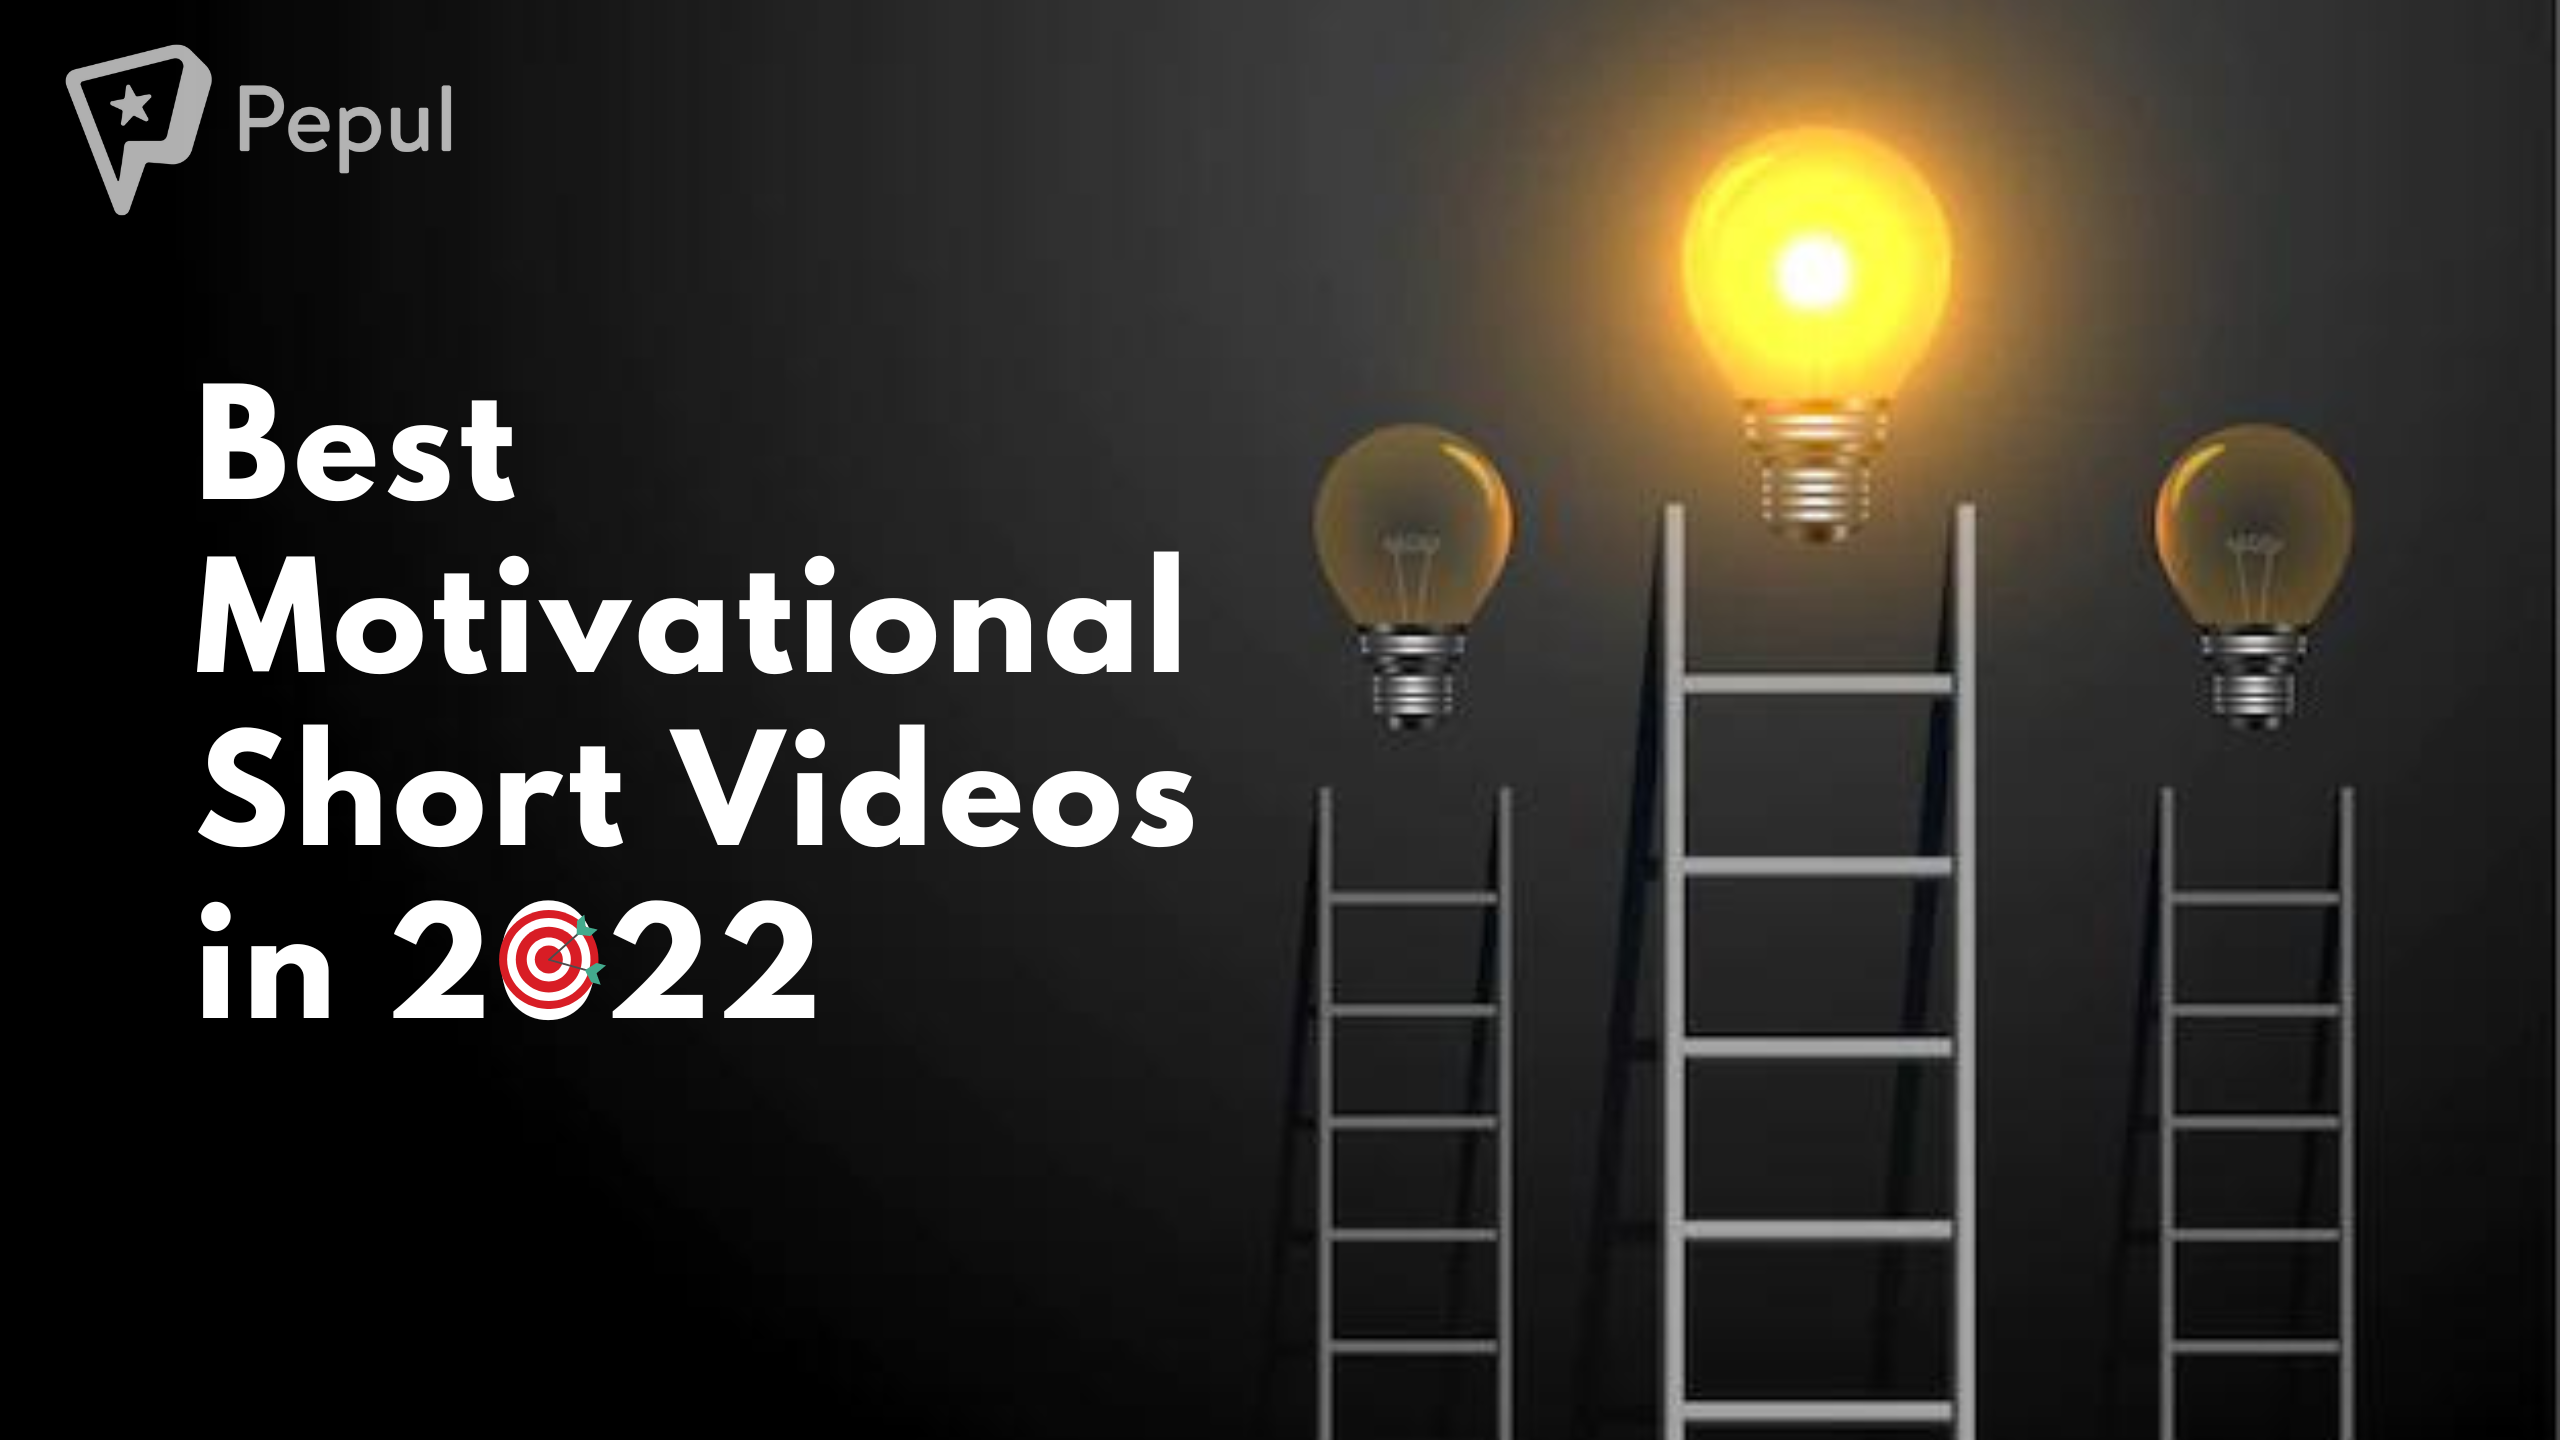 Top 5 Best Motivational Short Videos In 2022